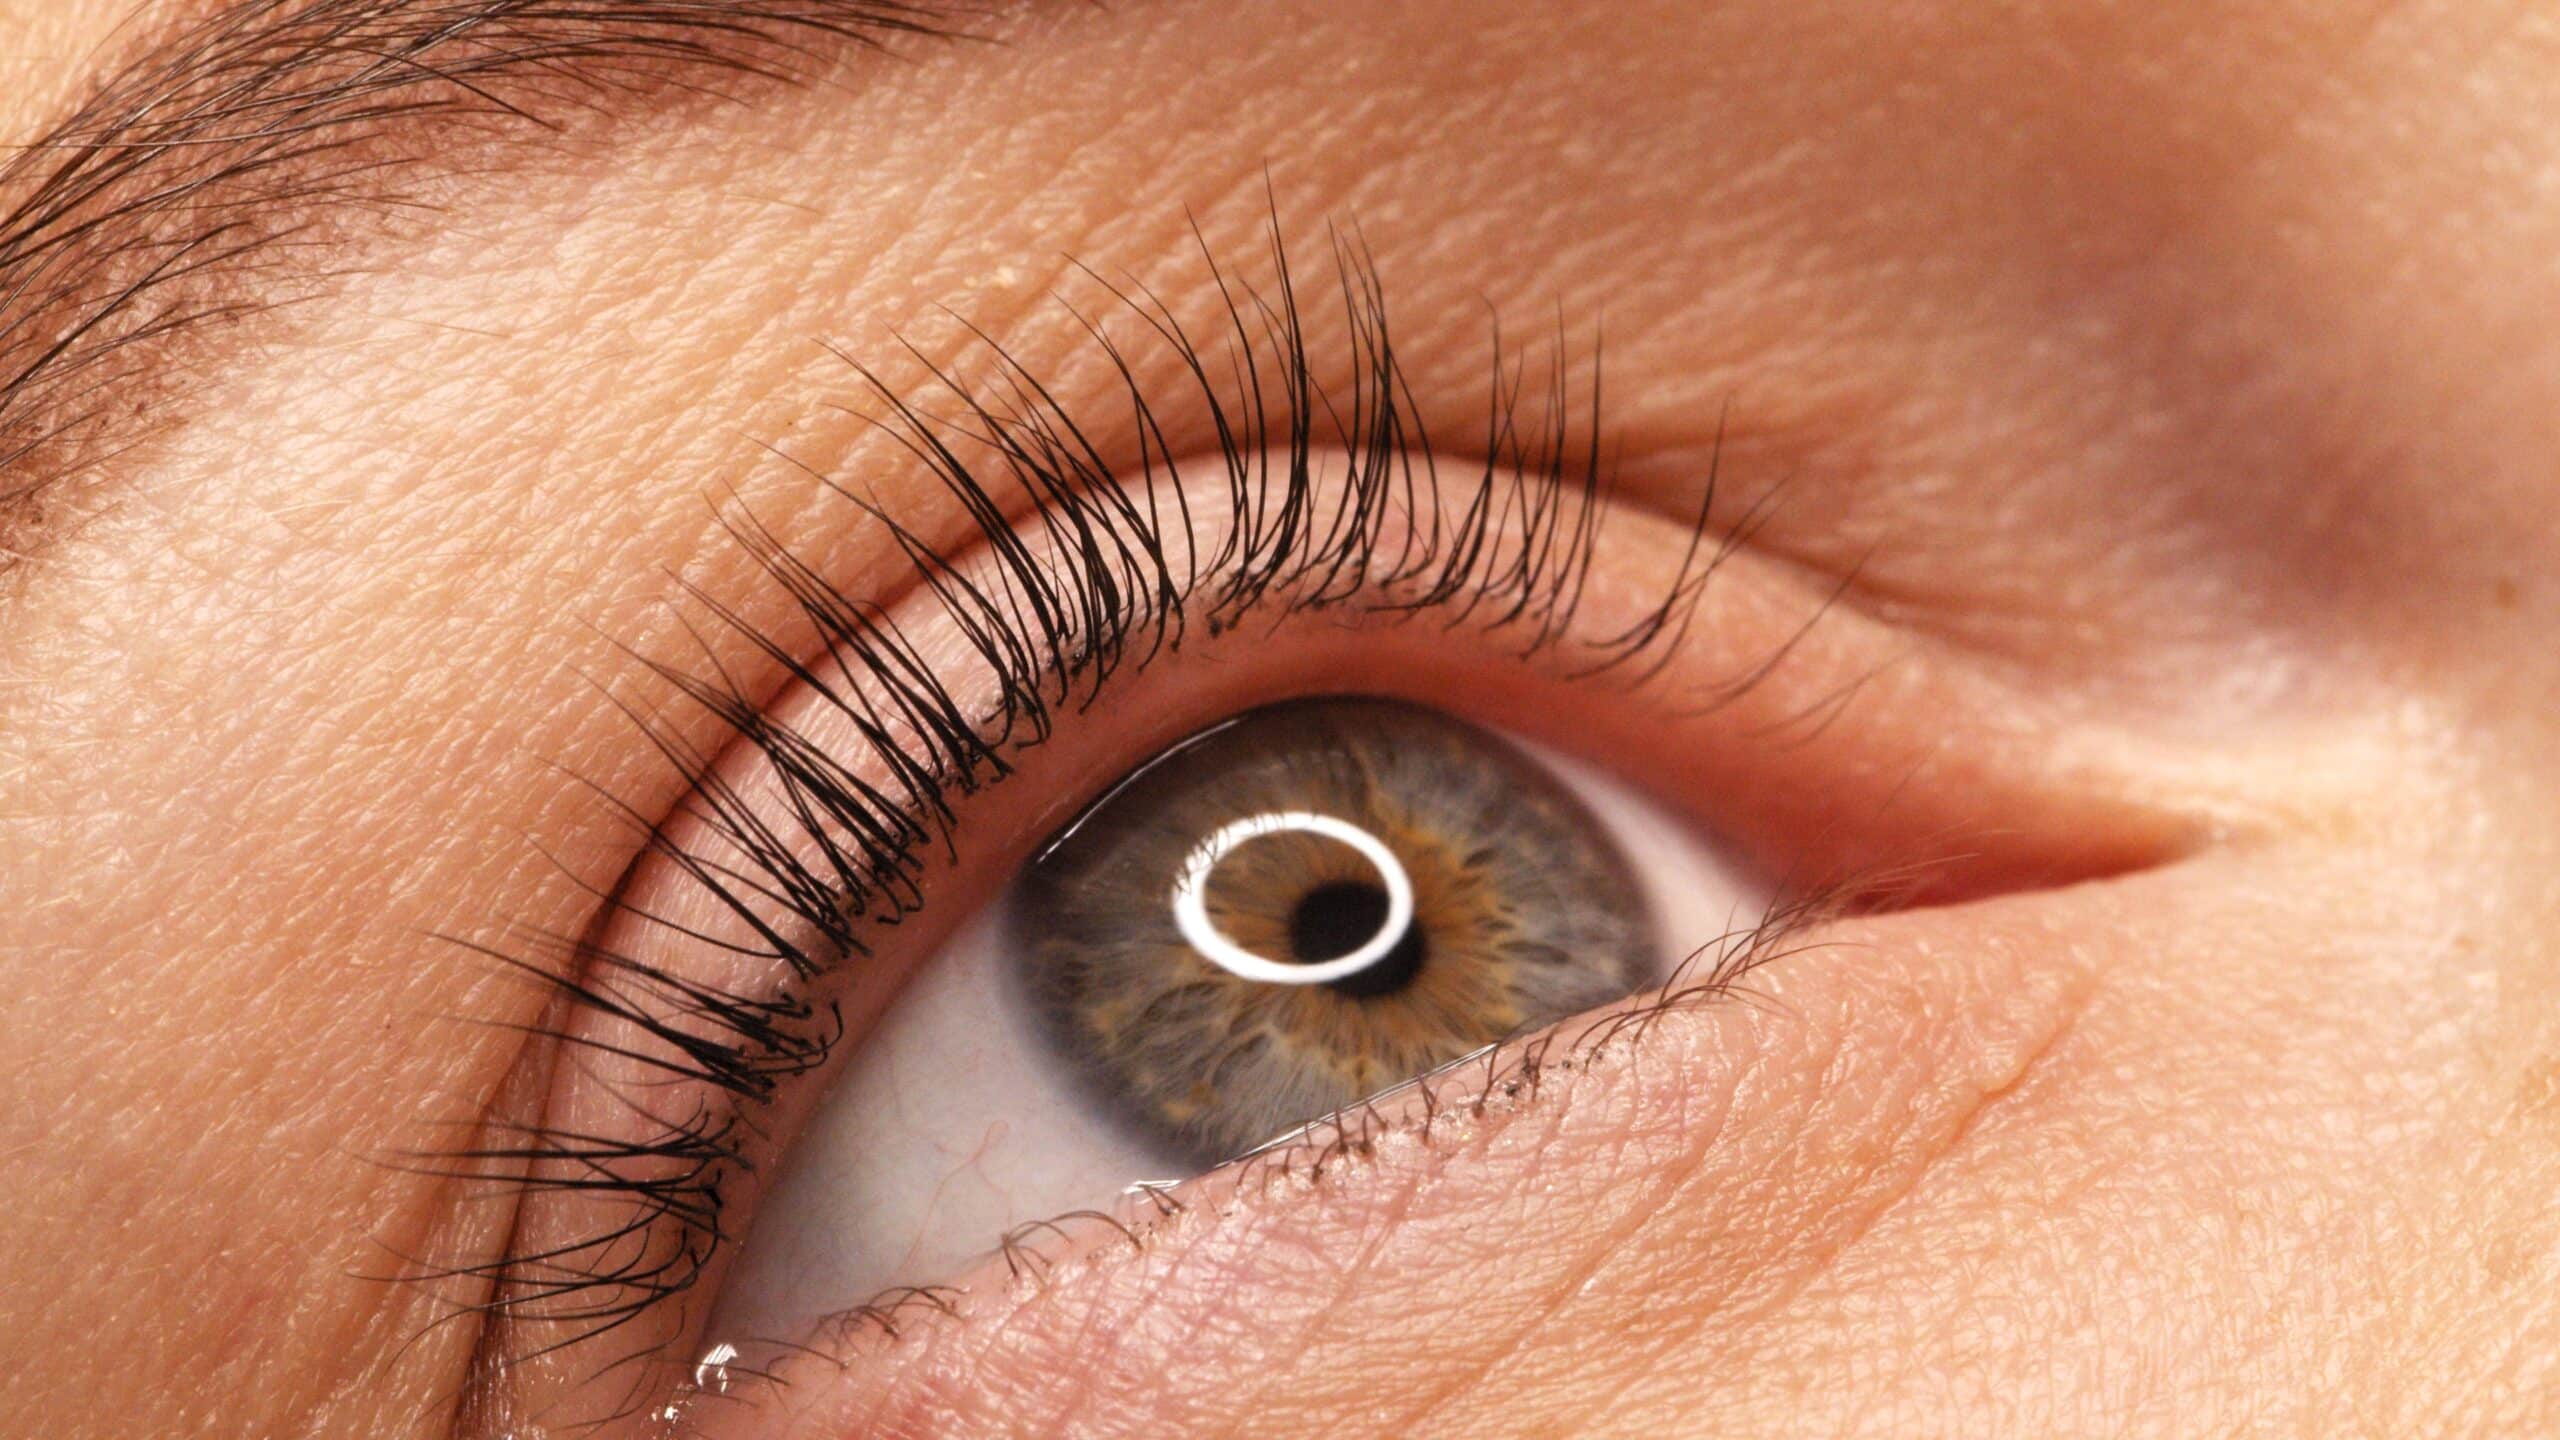 A woman's eye with long black eyelashes after lamination. Closeup opened girl's eye with eyelashes